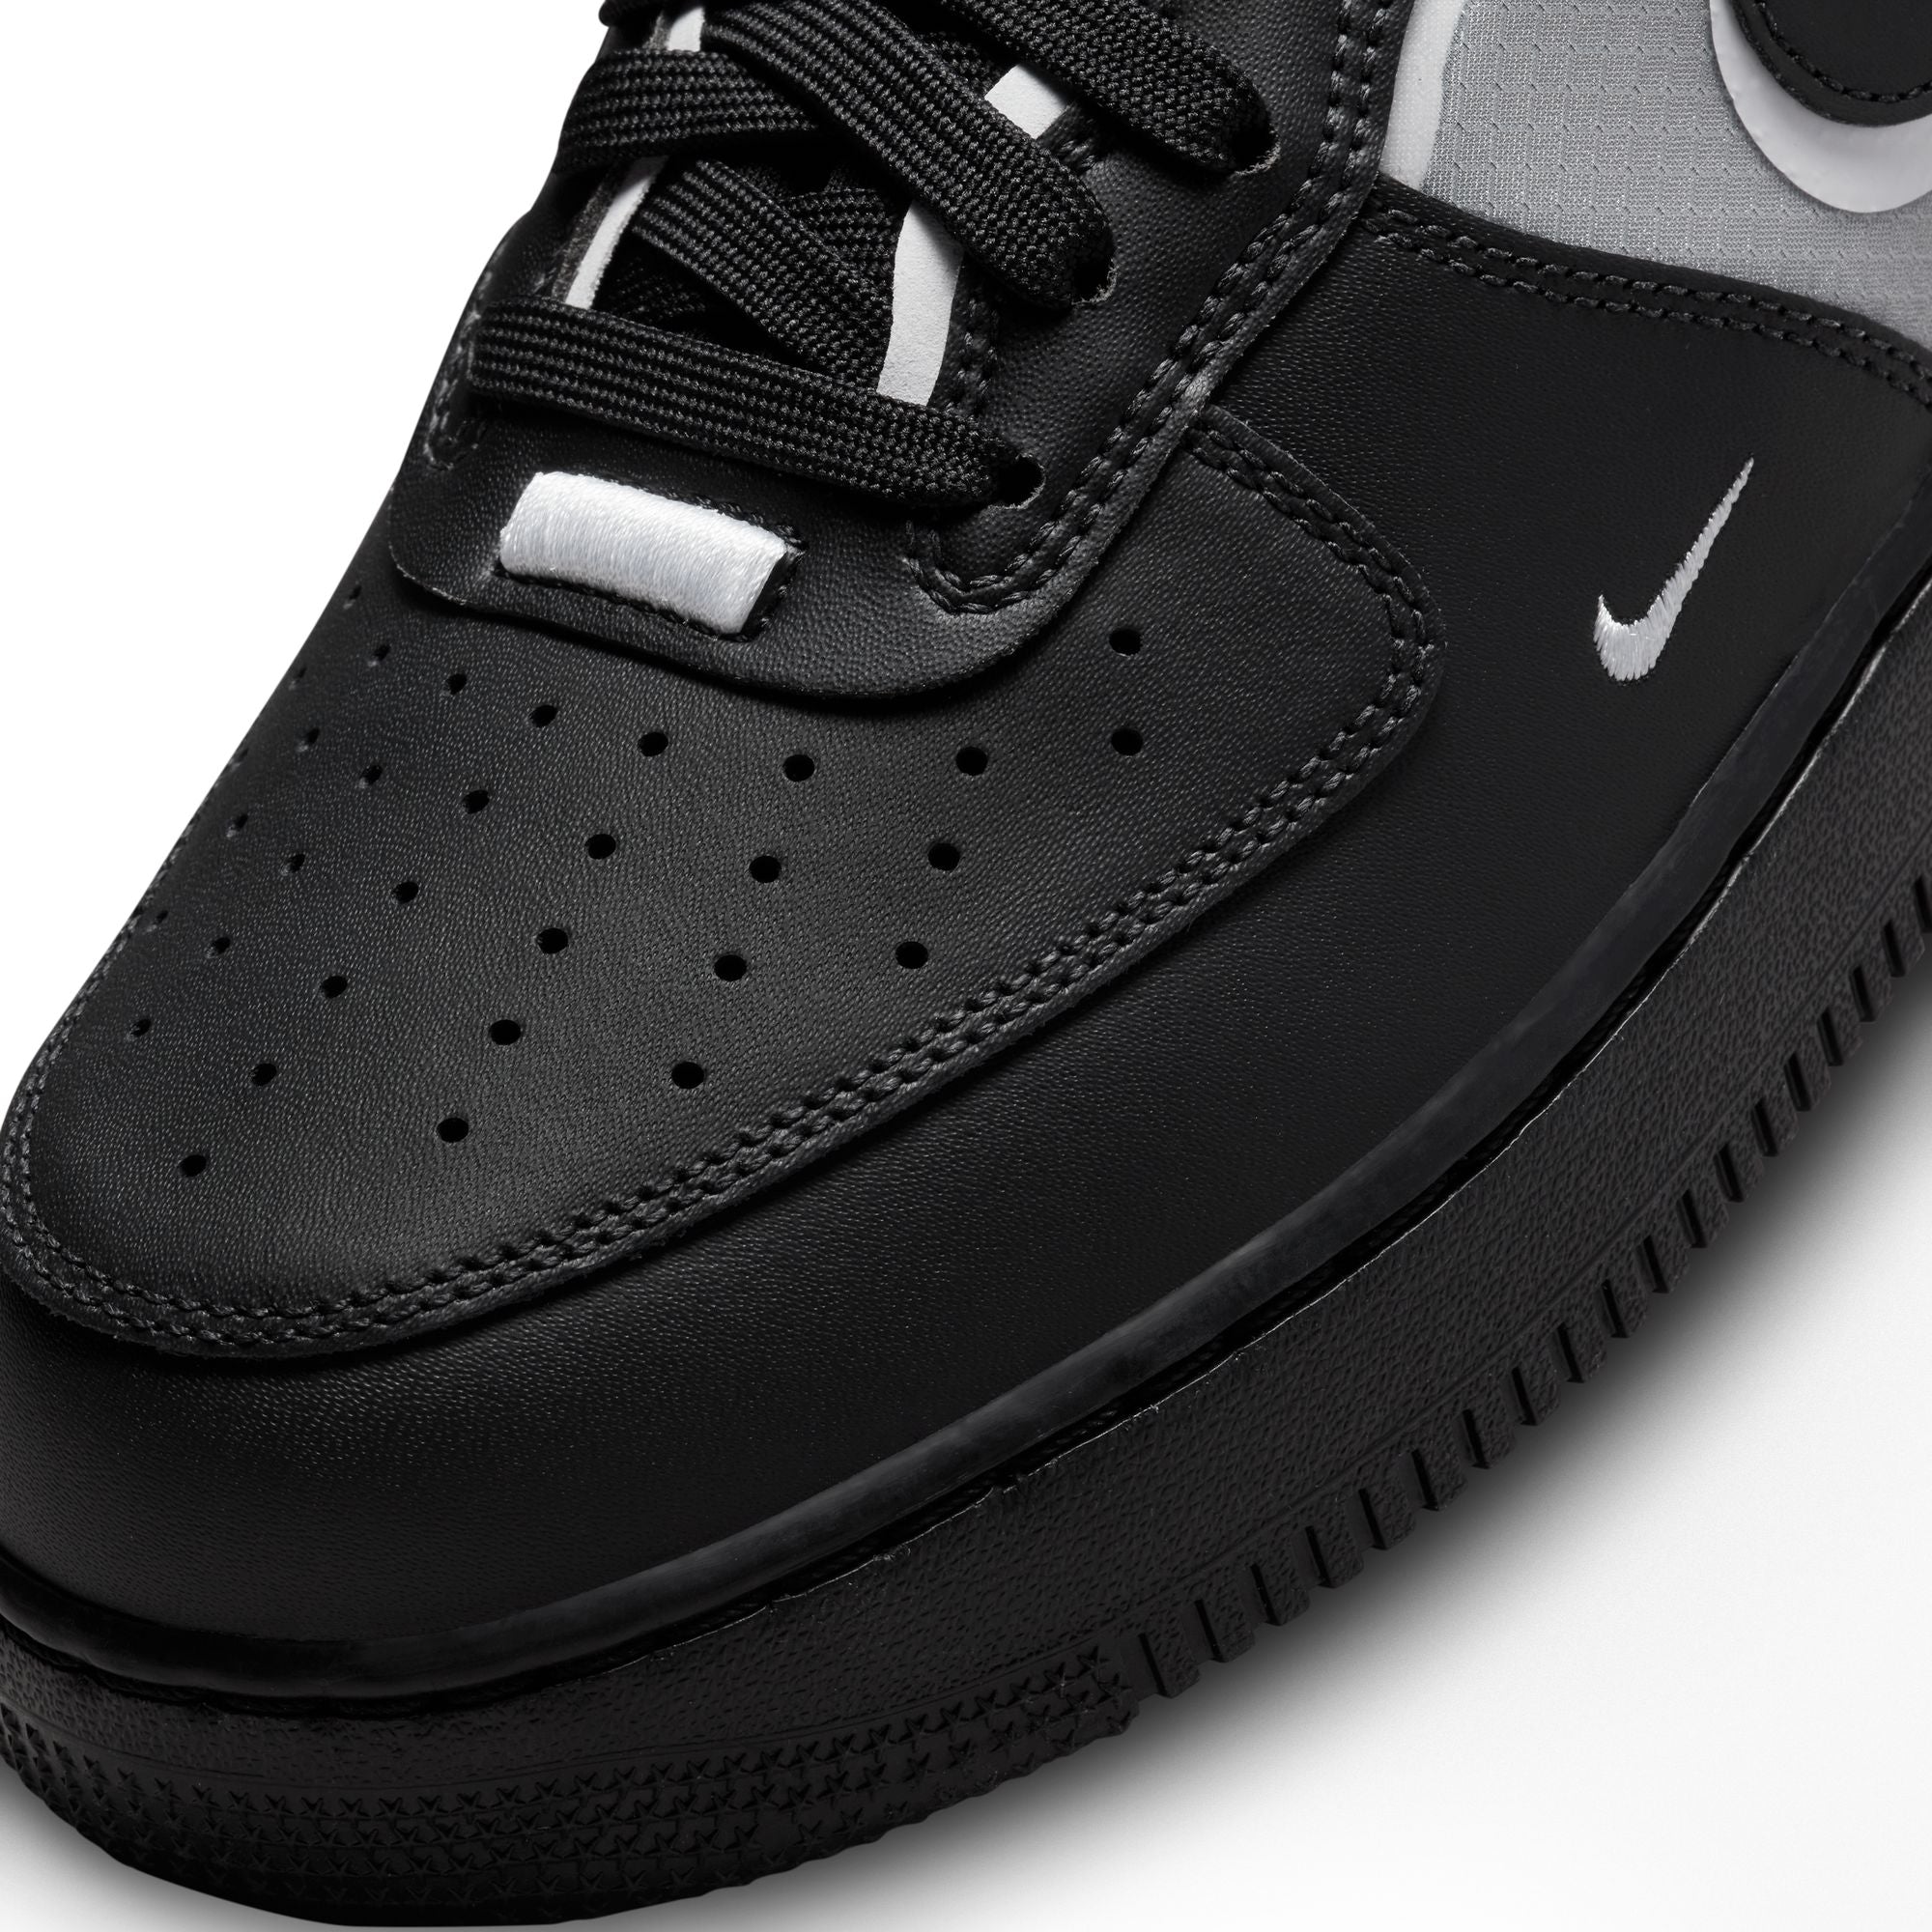 Nike Air Force 1 07 Lv8 Utility - Black - Mens Shoes - Basketball